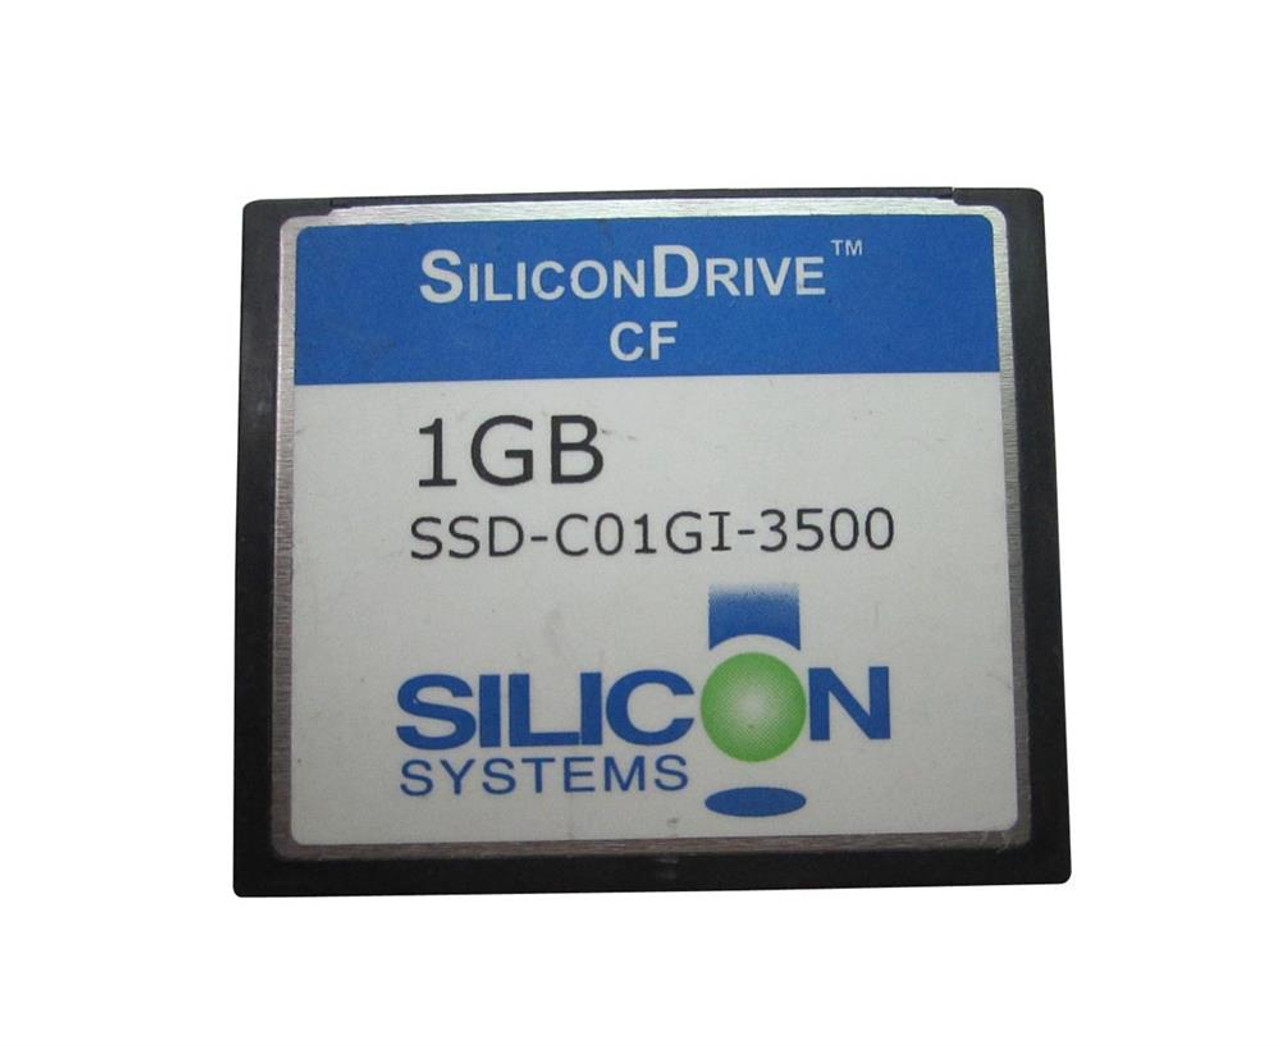 SSD-C01GI-3500 Silicon ATA / IDE Drives 1GB Solid State Drive